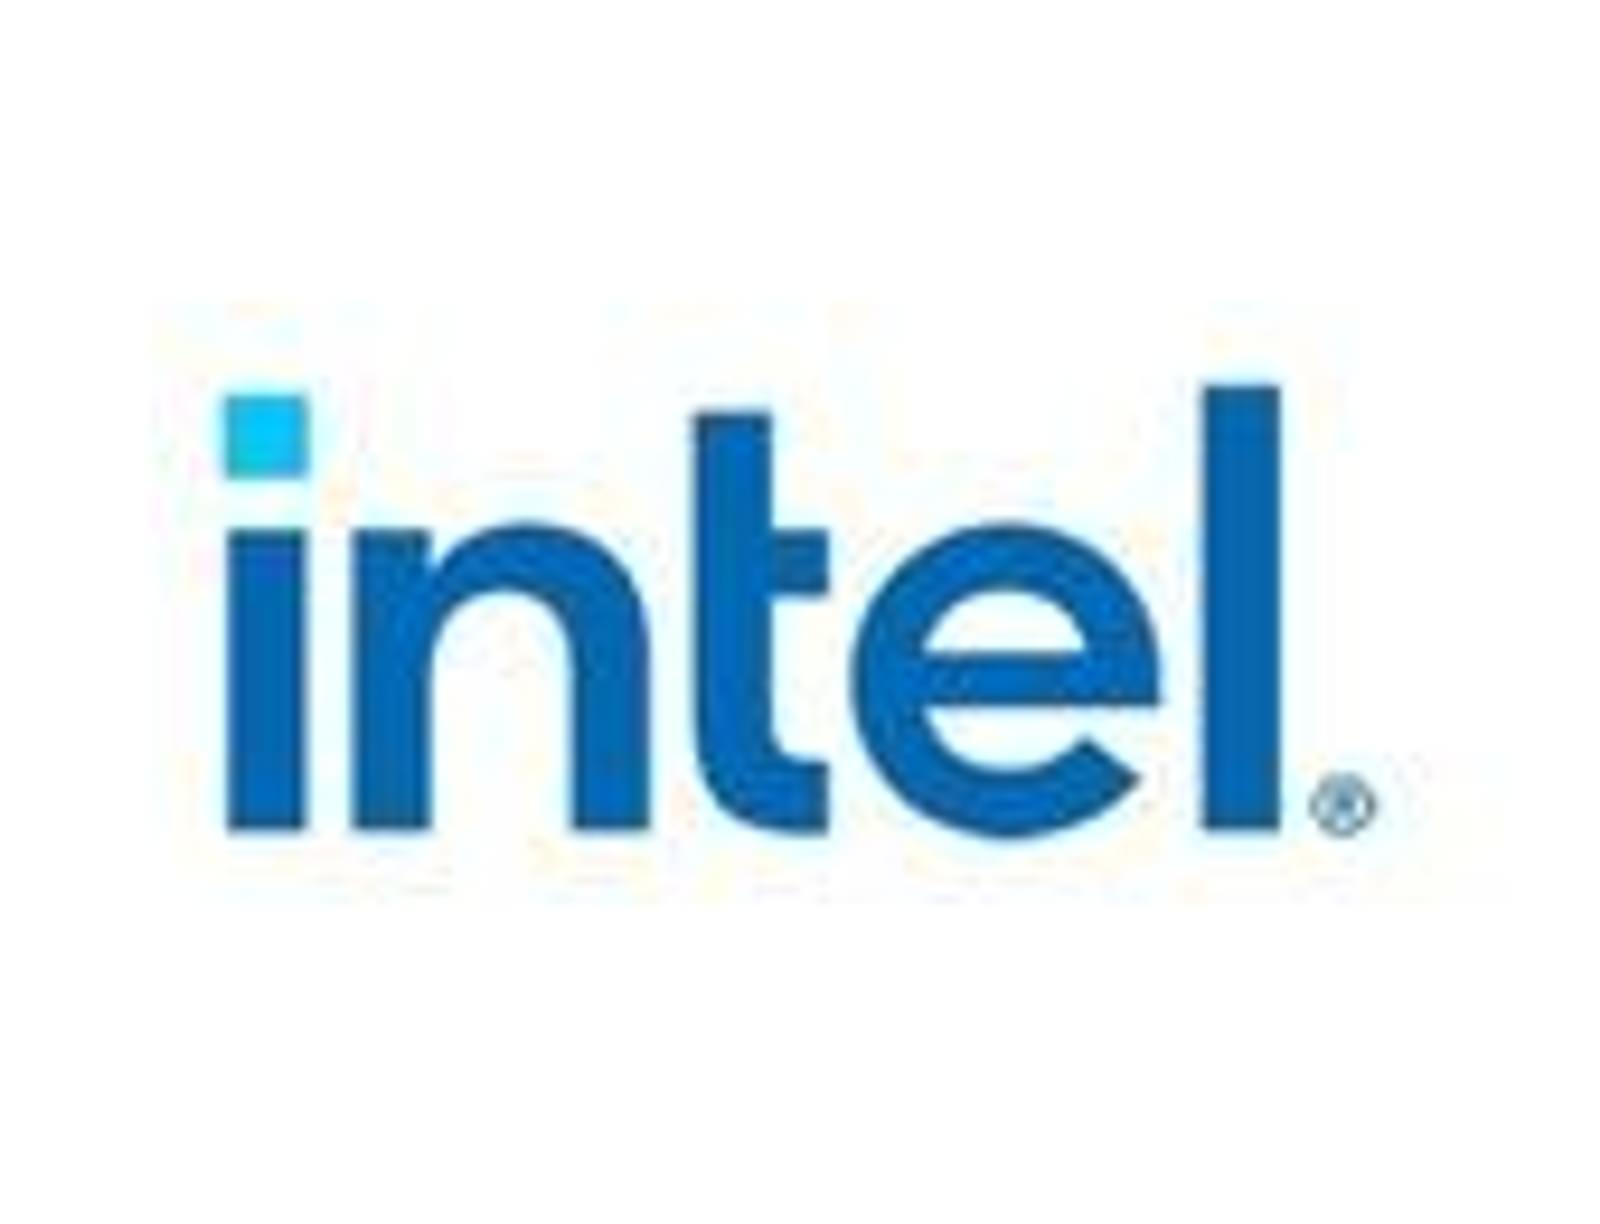 Intel 170x130 whitespace